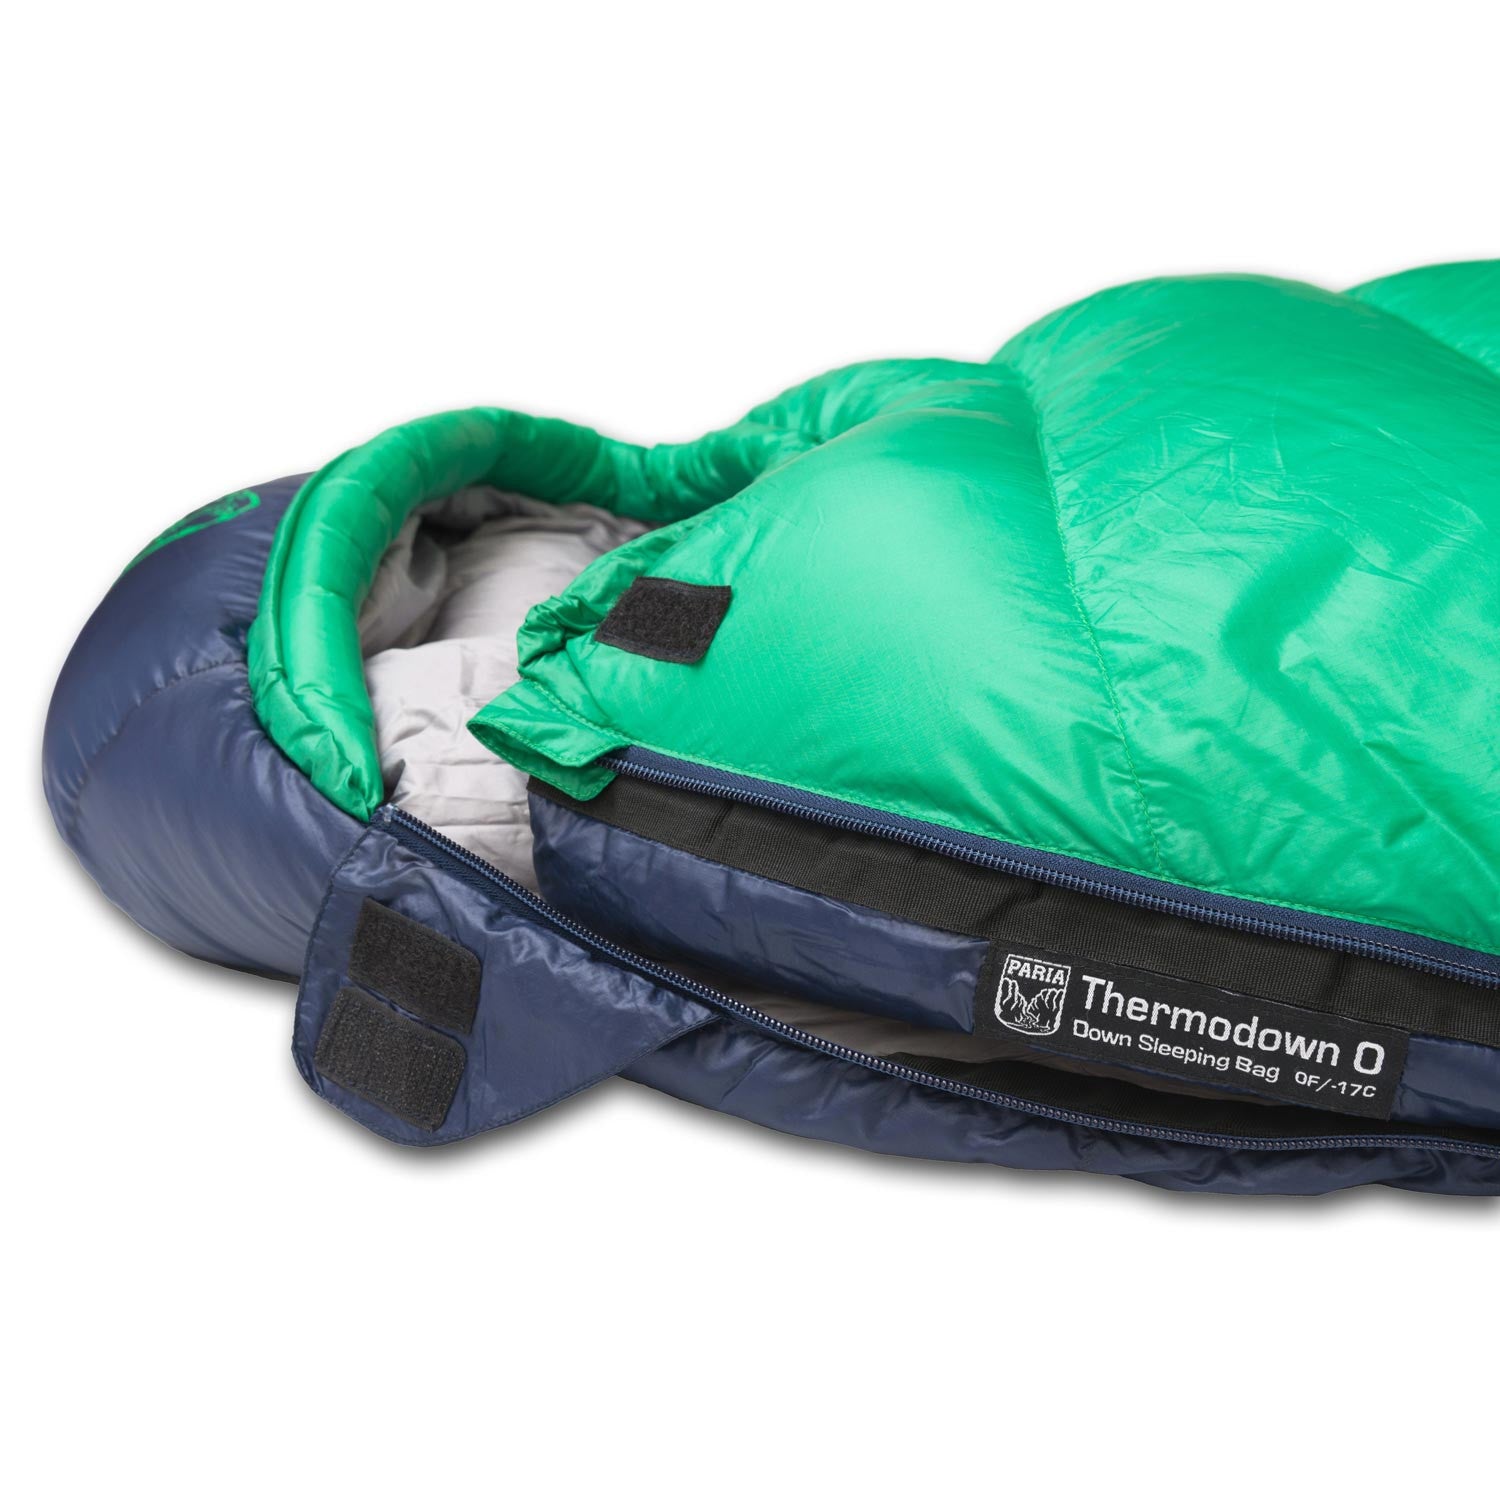 How to Wash a Down Sleeping Bag | Snowys Blog